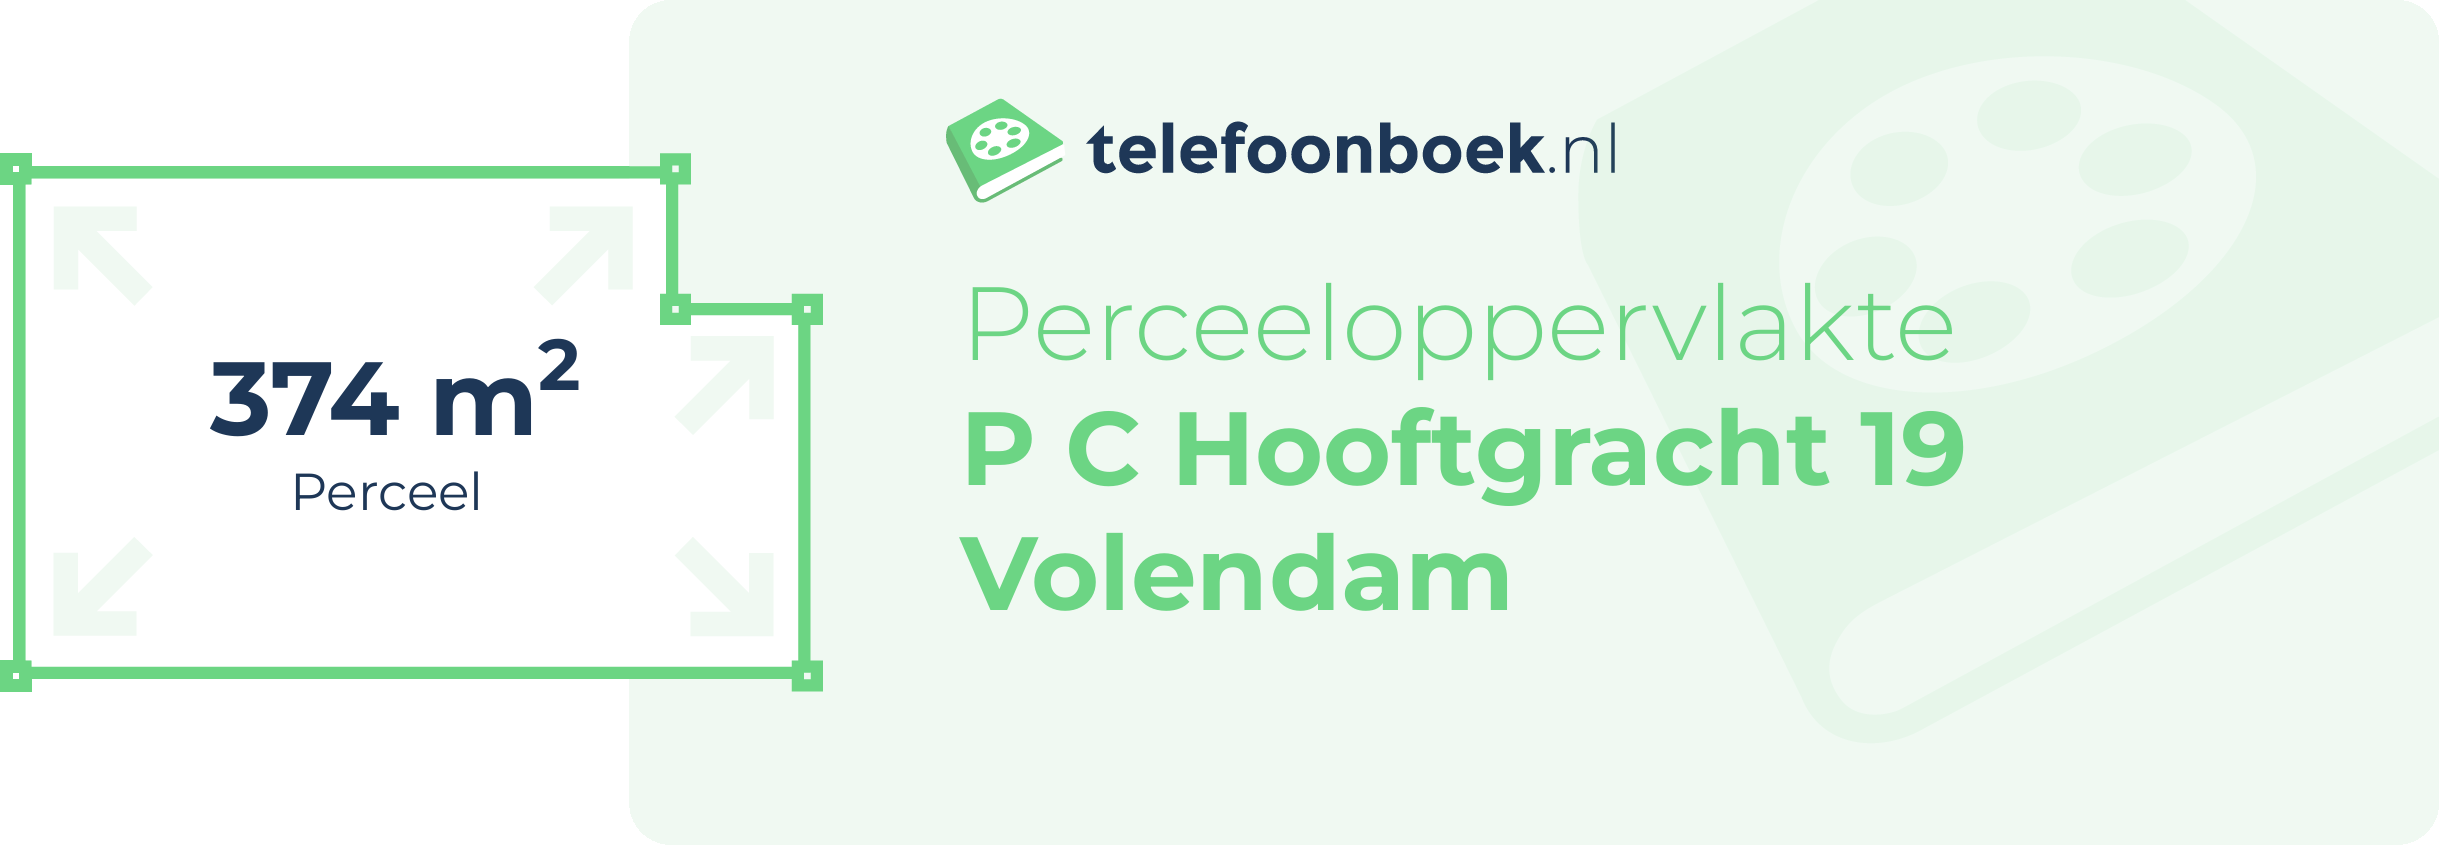 Perceeloppervlakte P C Hooftgracht 19 Volendam